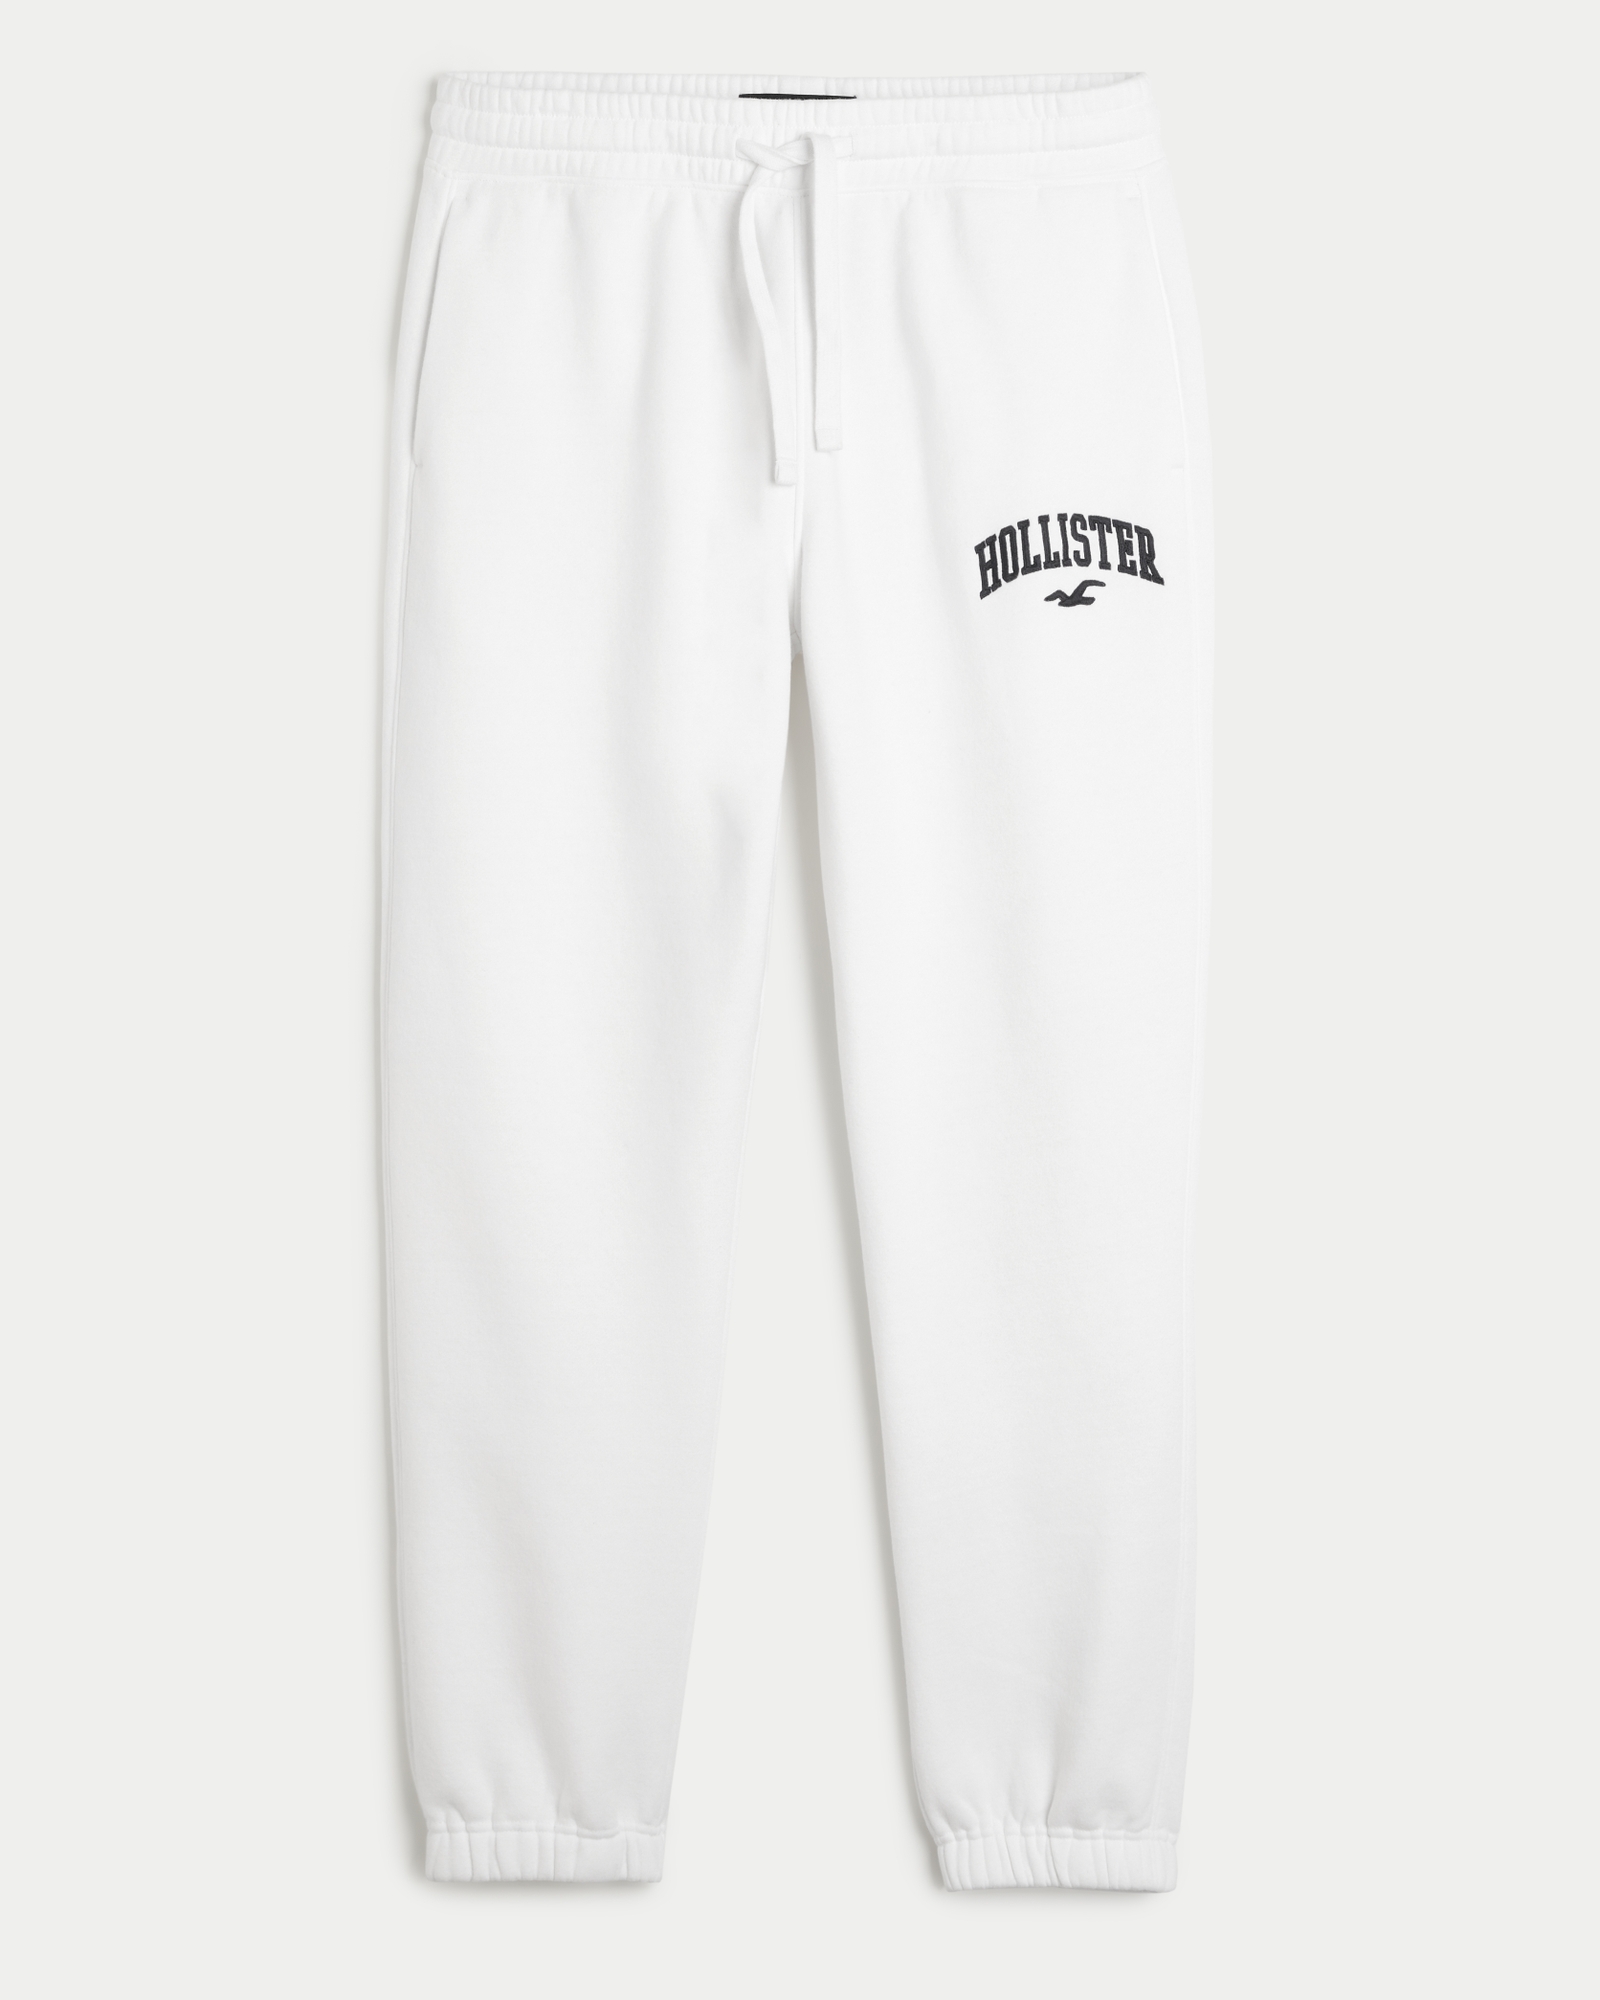 Hollister logo sweatpants in gray